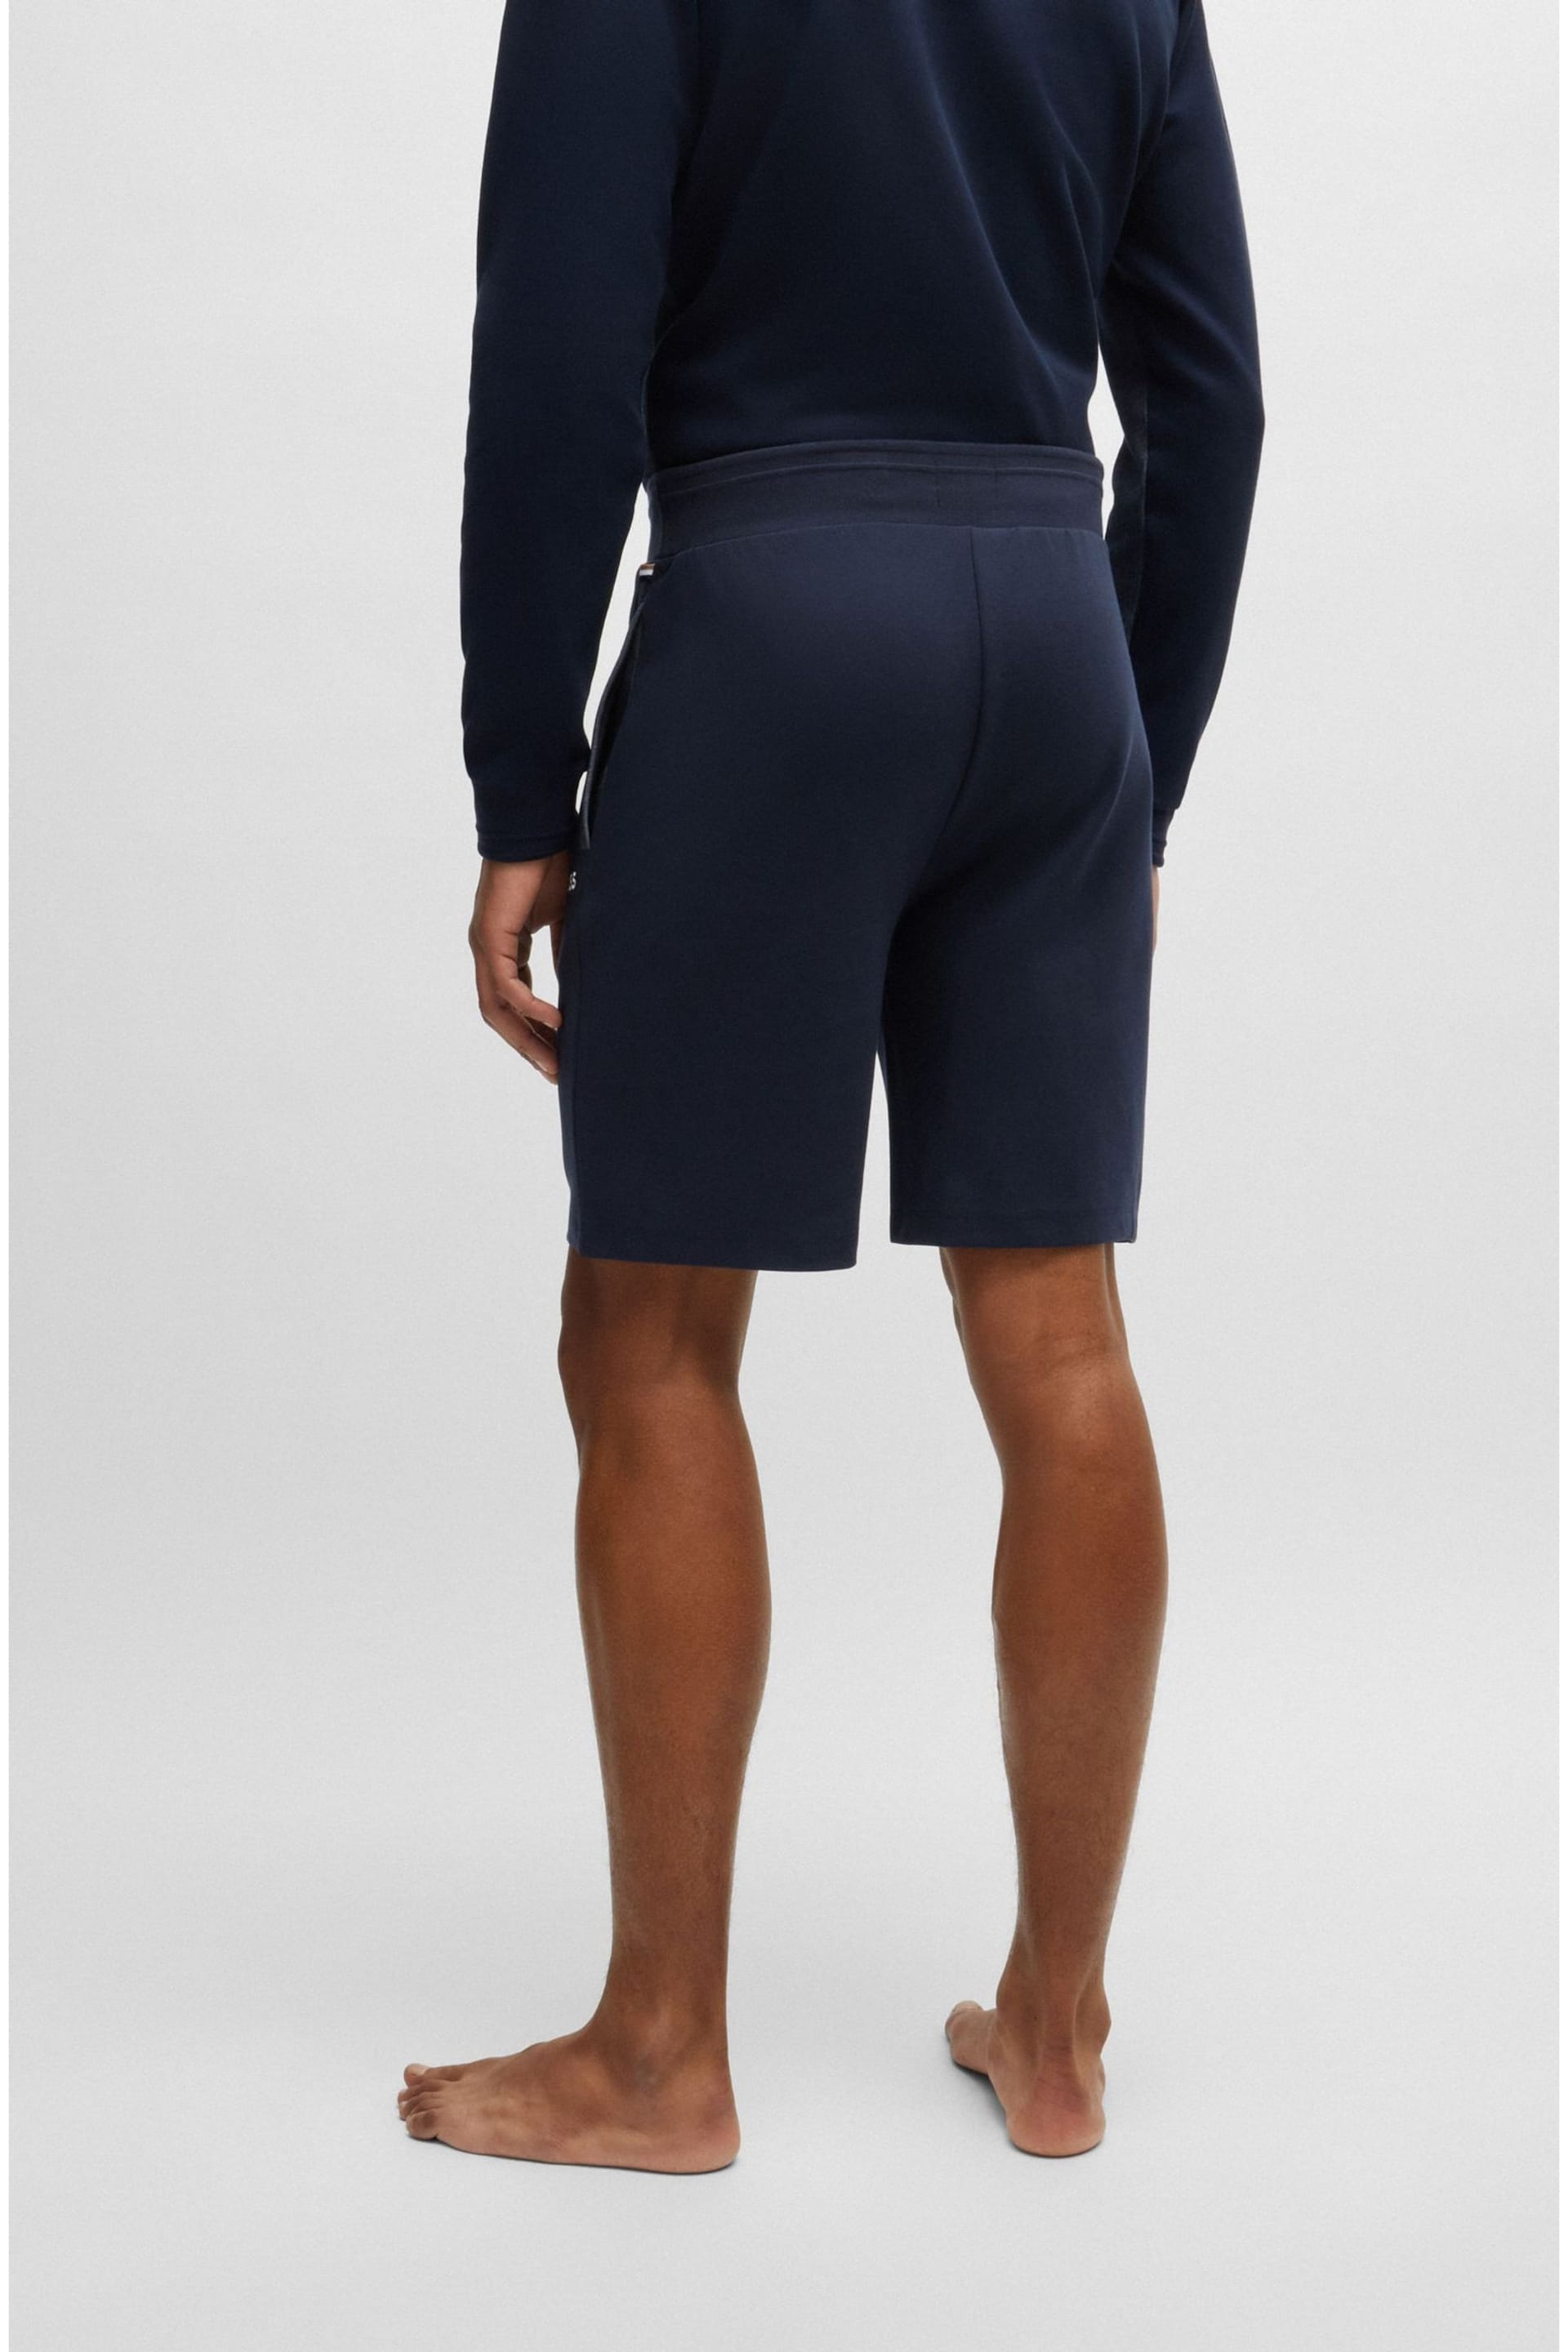 BOSS Blue Drawstring Cotton Pique Blend Jersey Shorts - Image 4 of 5